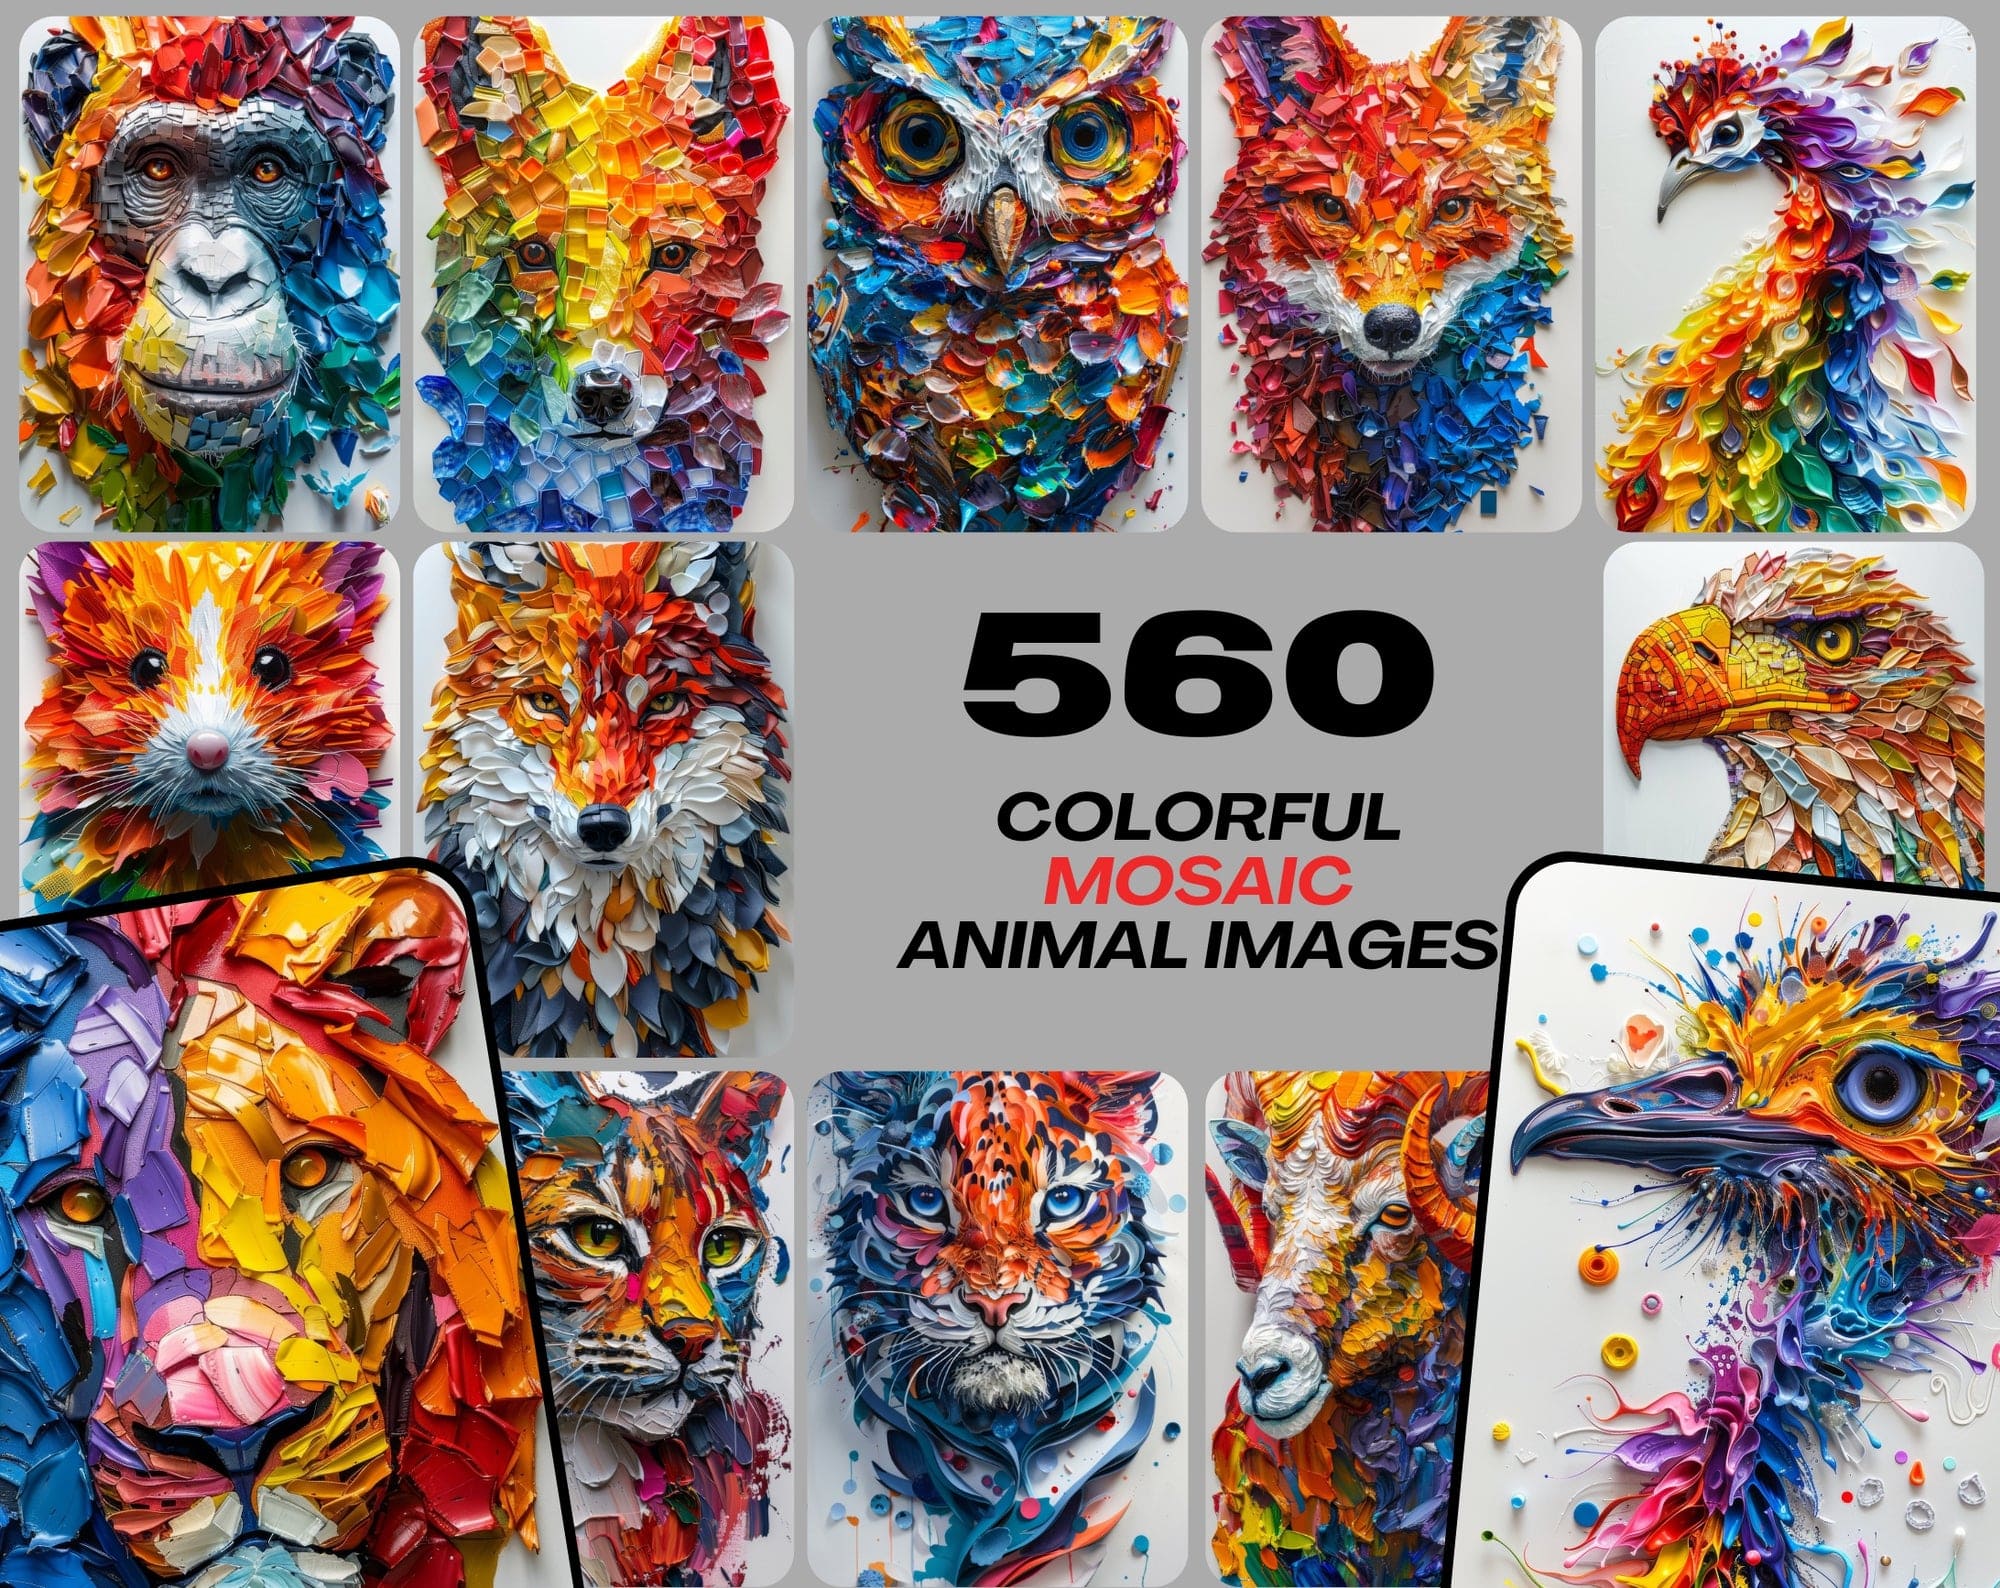 560 Vibrant Mosaic Animal Art - Colorful Abstract Wildlife Images Digital Download Sumobundle